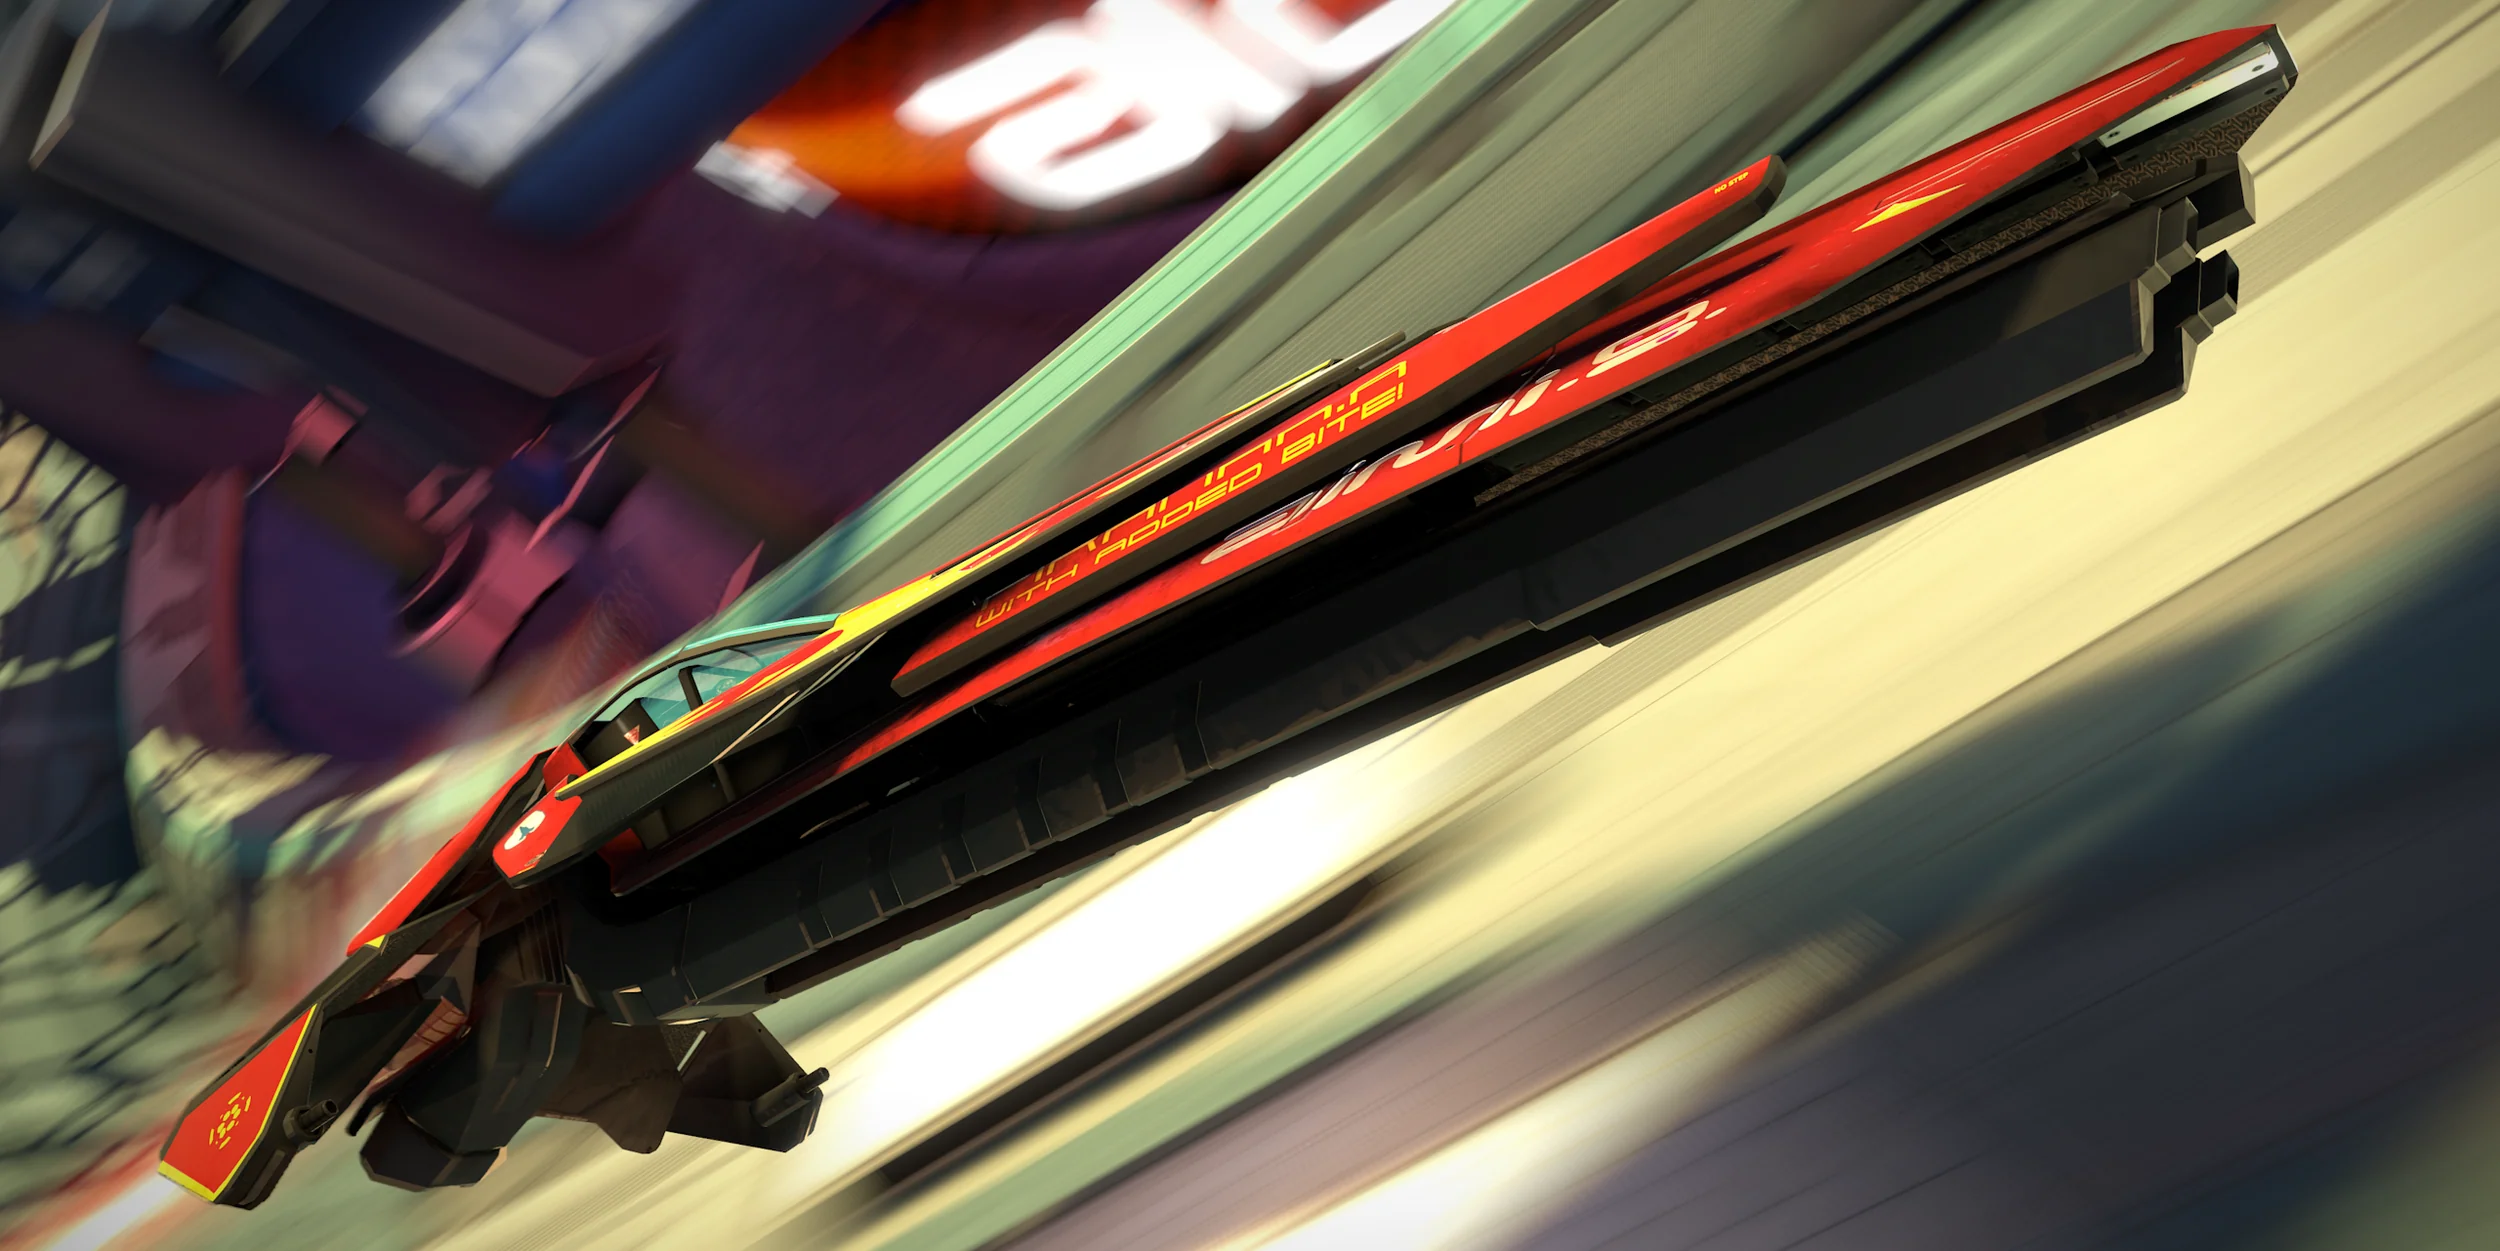 Wipeout Video Games Futuristic Racing 2500x1251